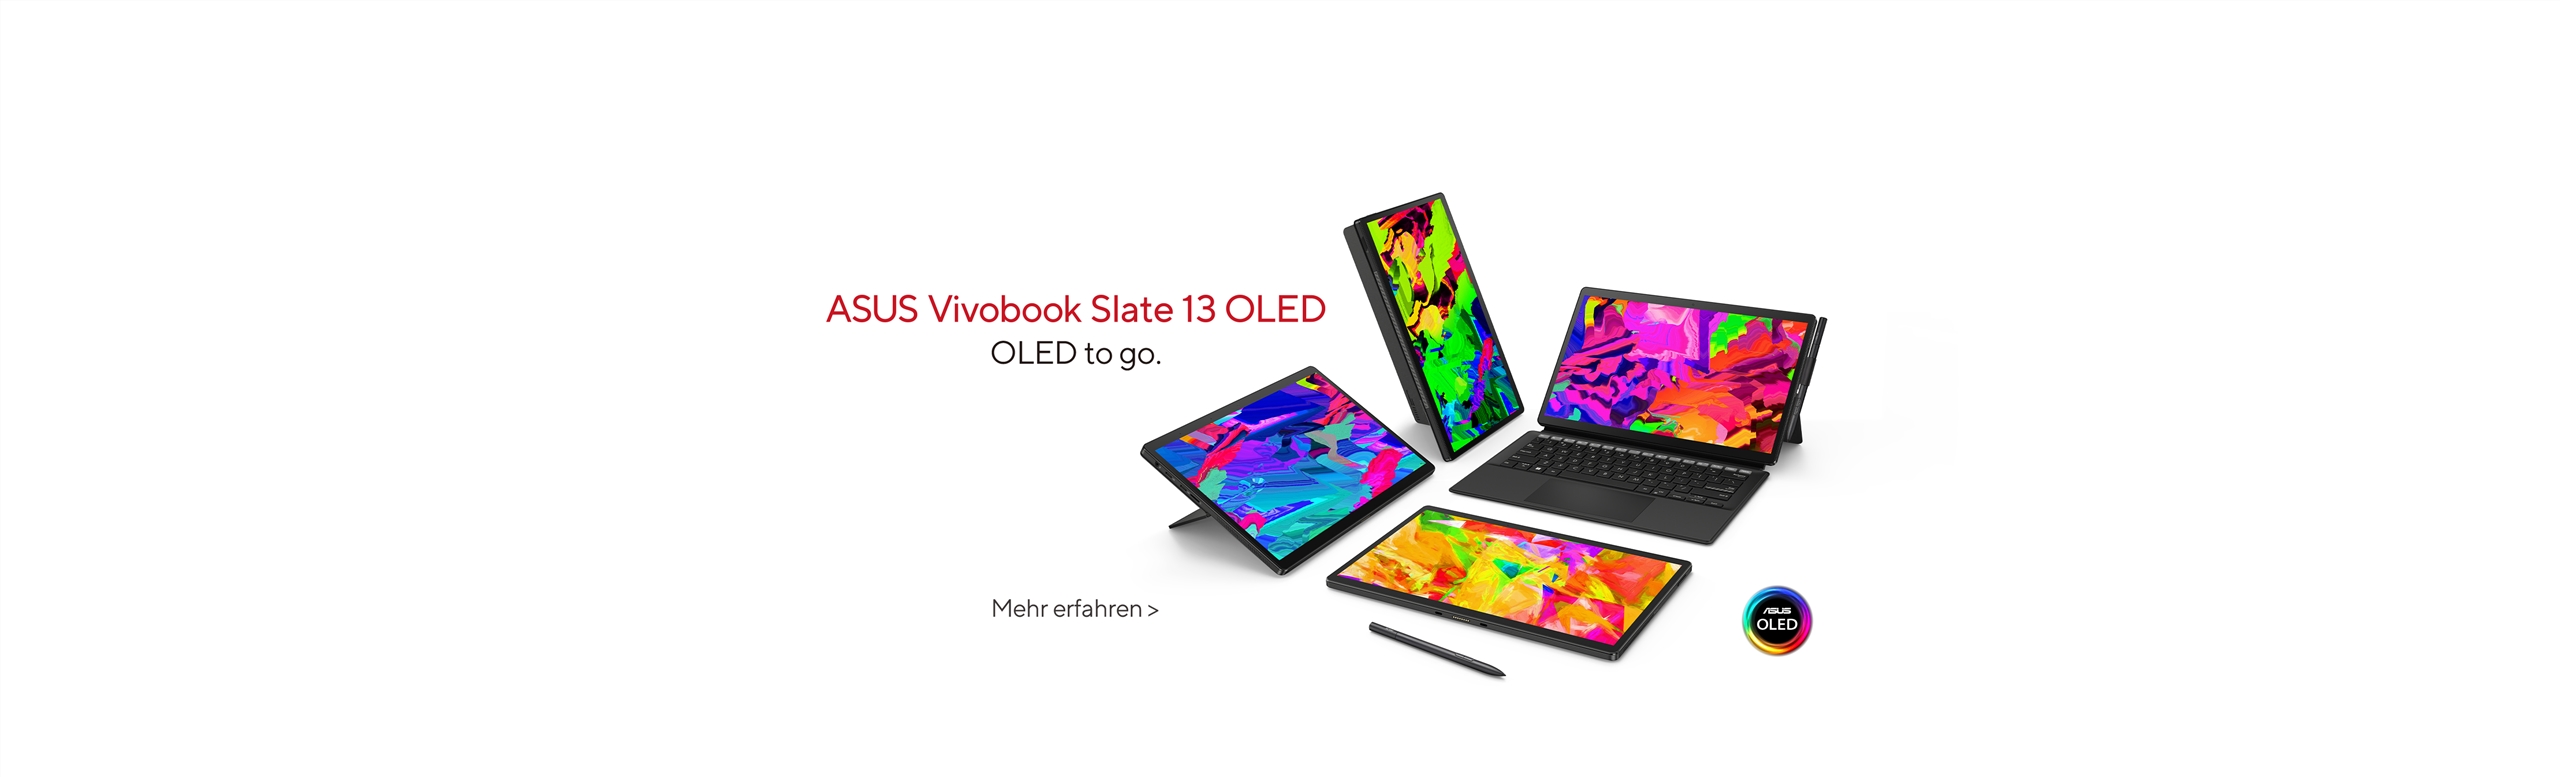 Das neue Vivobook 13 Slate OLED T3300 entdecken